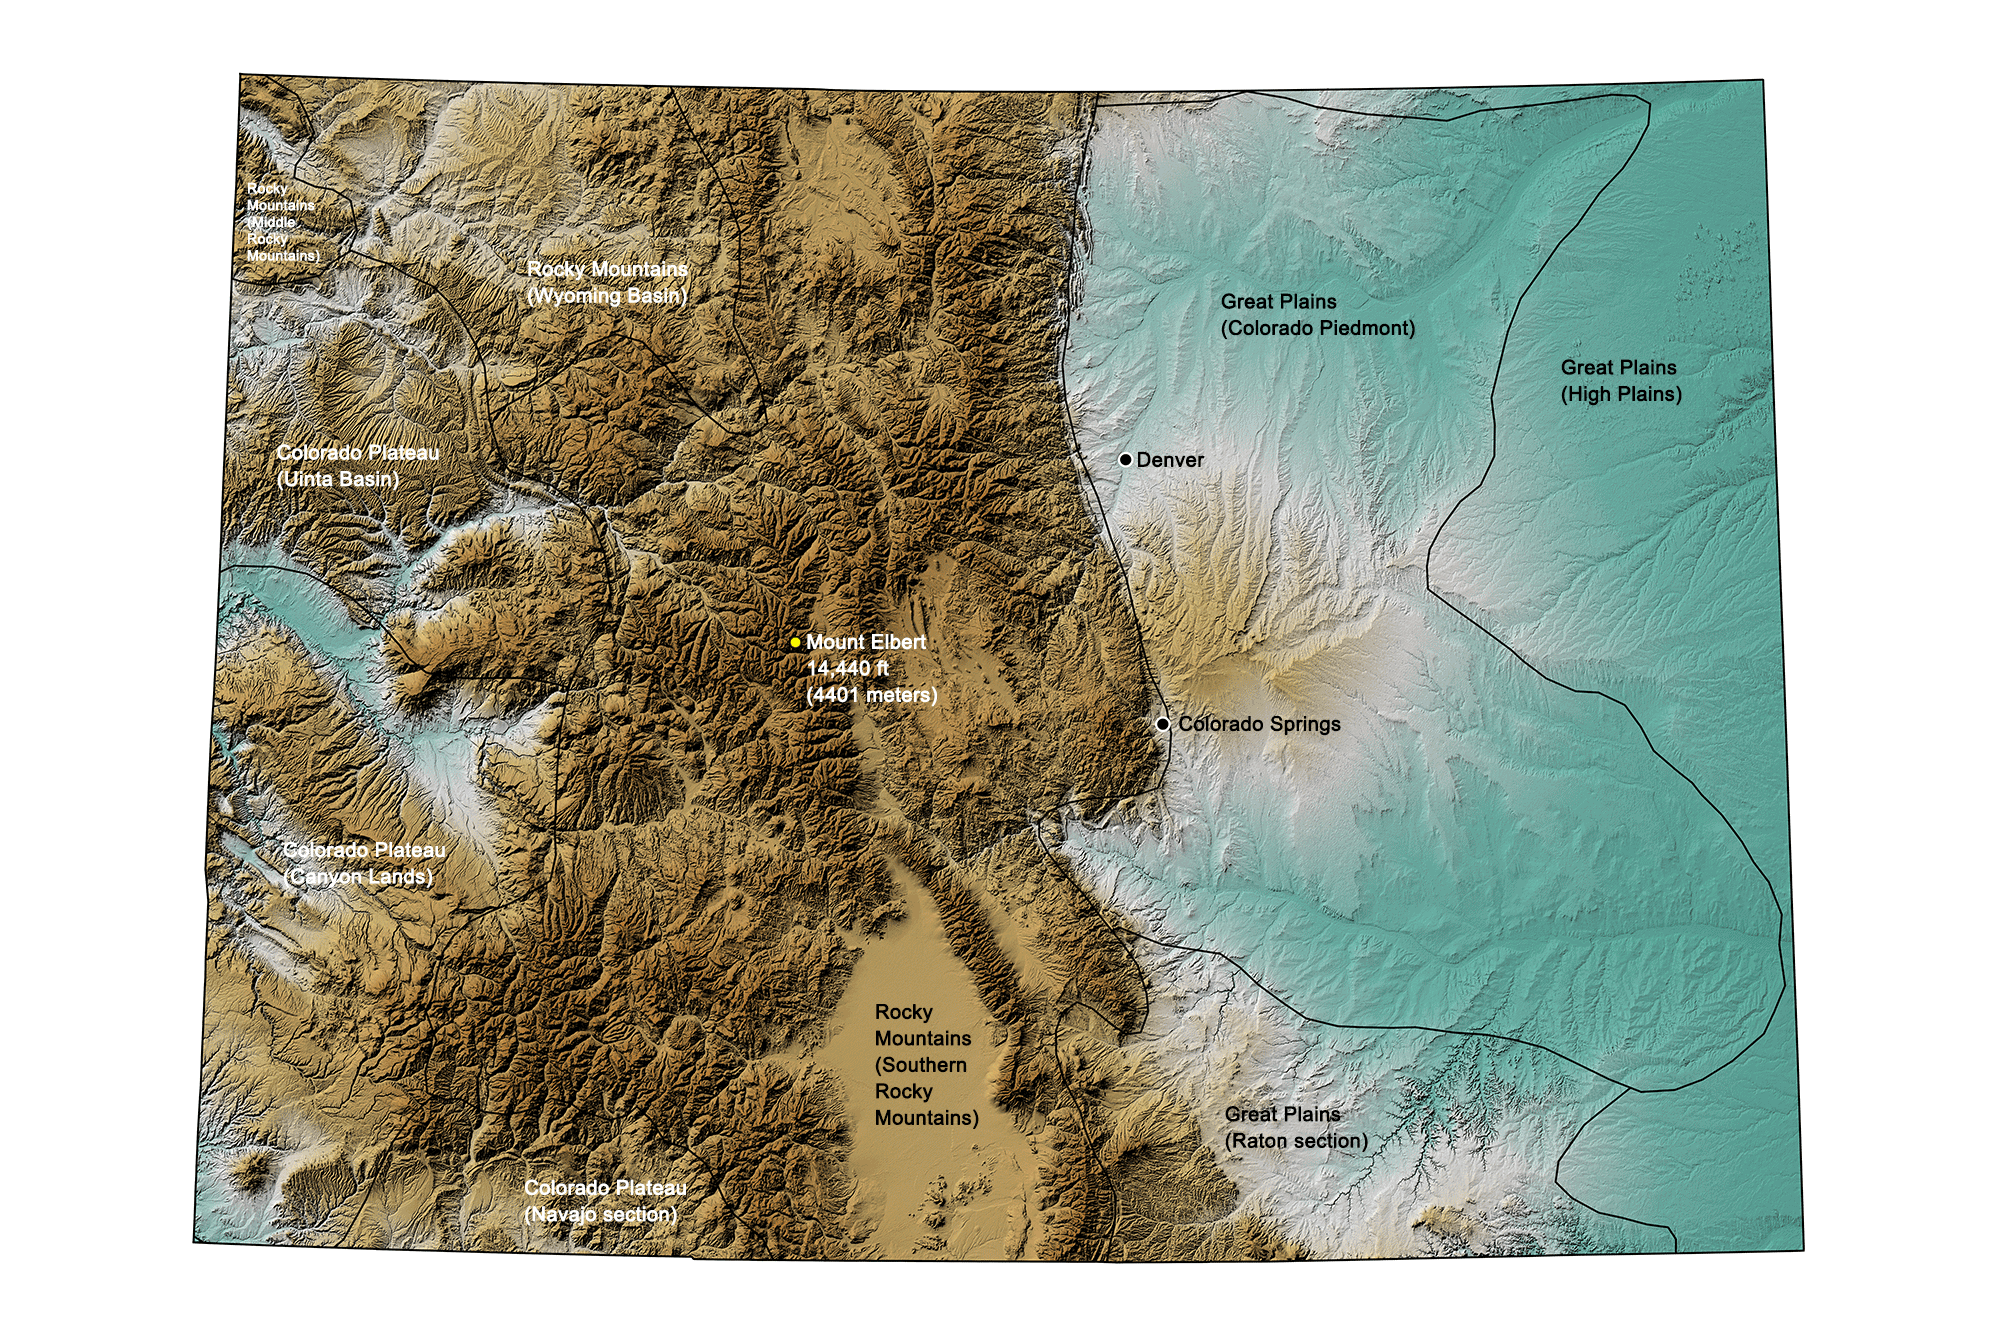 Topographic map of Colorado.